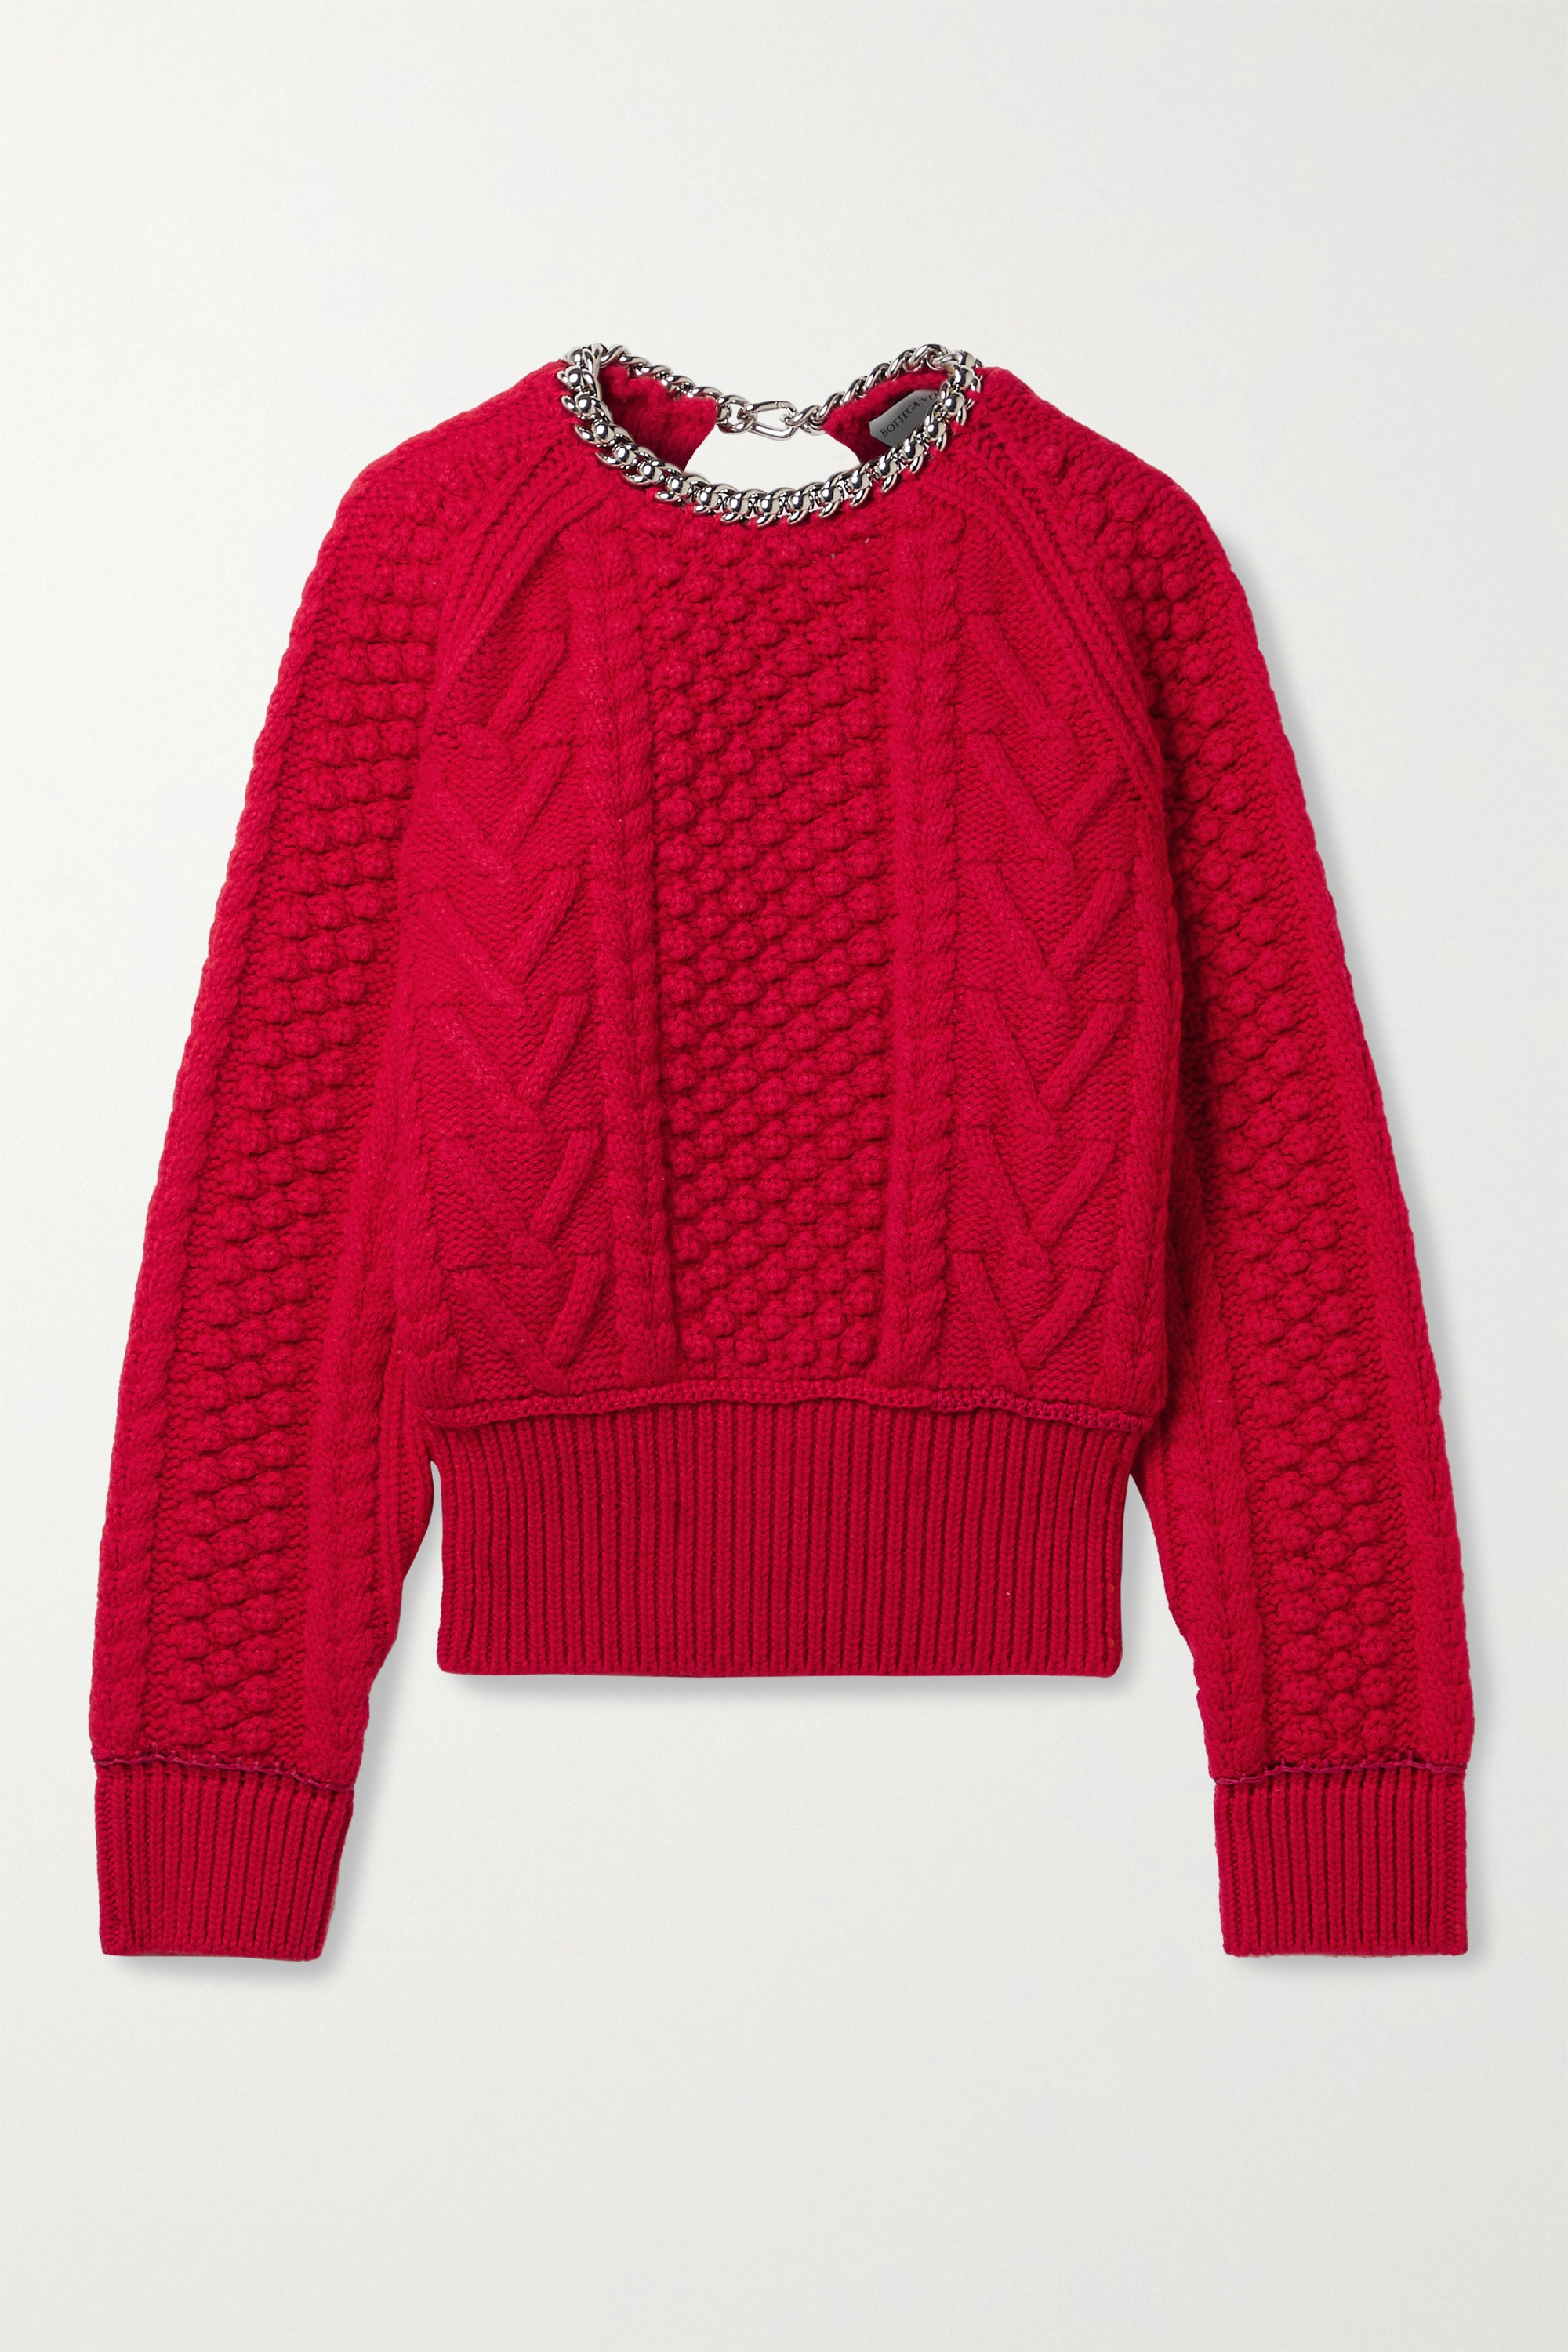 Bottega Veneta Chain-Embellished Open-Back Cable-Knit Wool Sweater